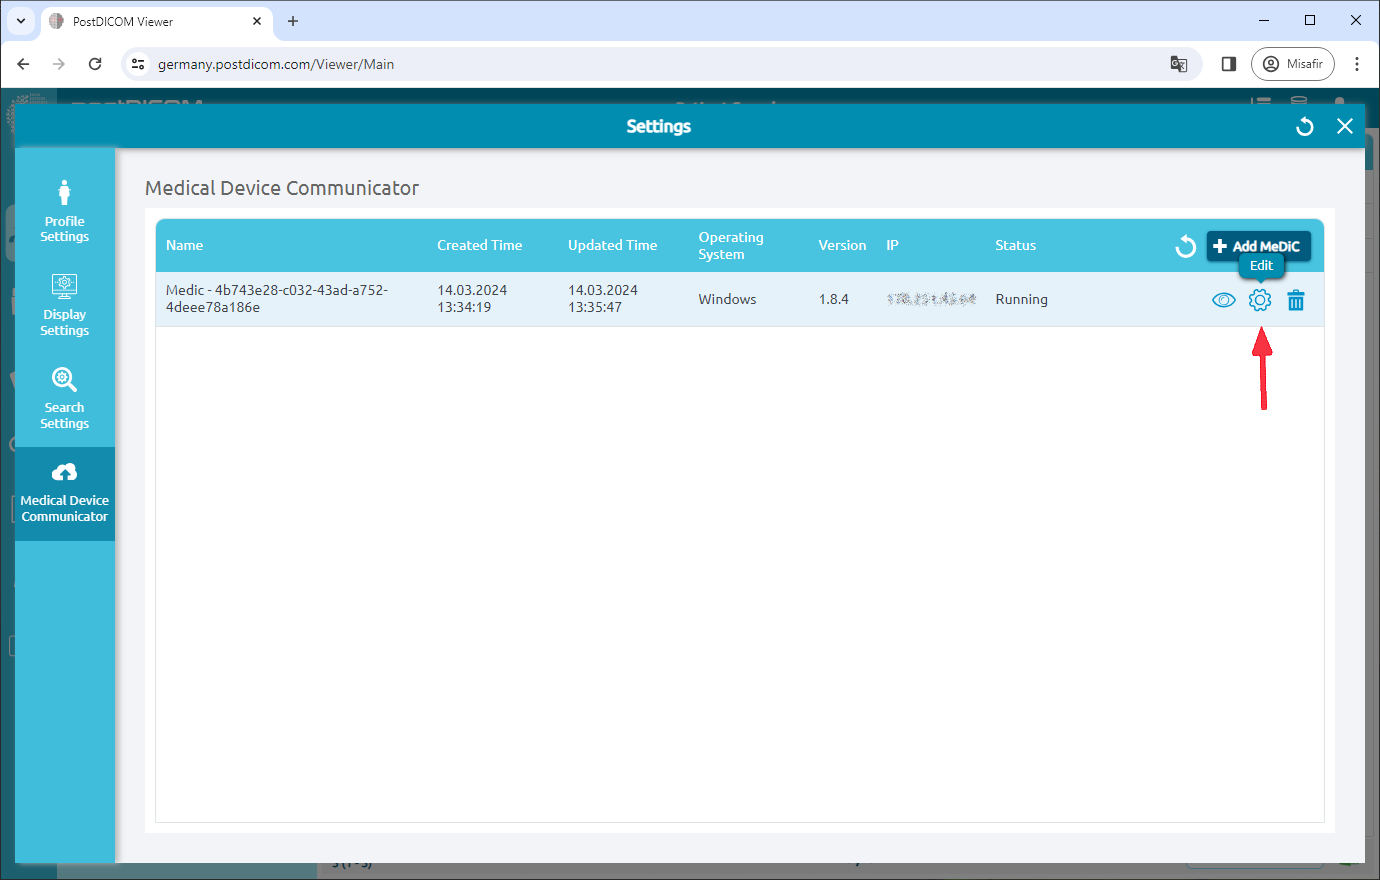 Editing Medical Device Communicator (MeDiC) PACS Server Settings for Windows